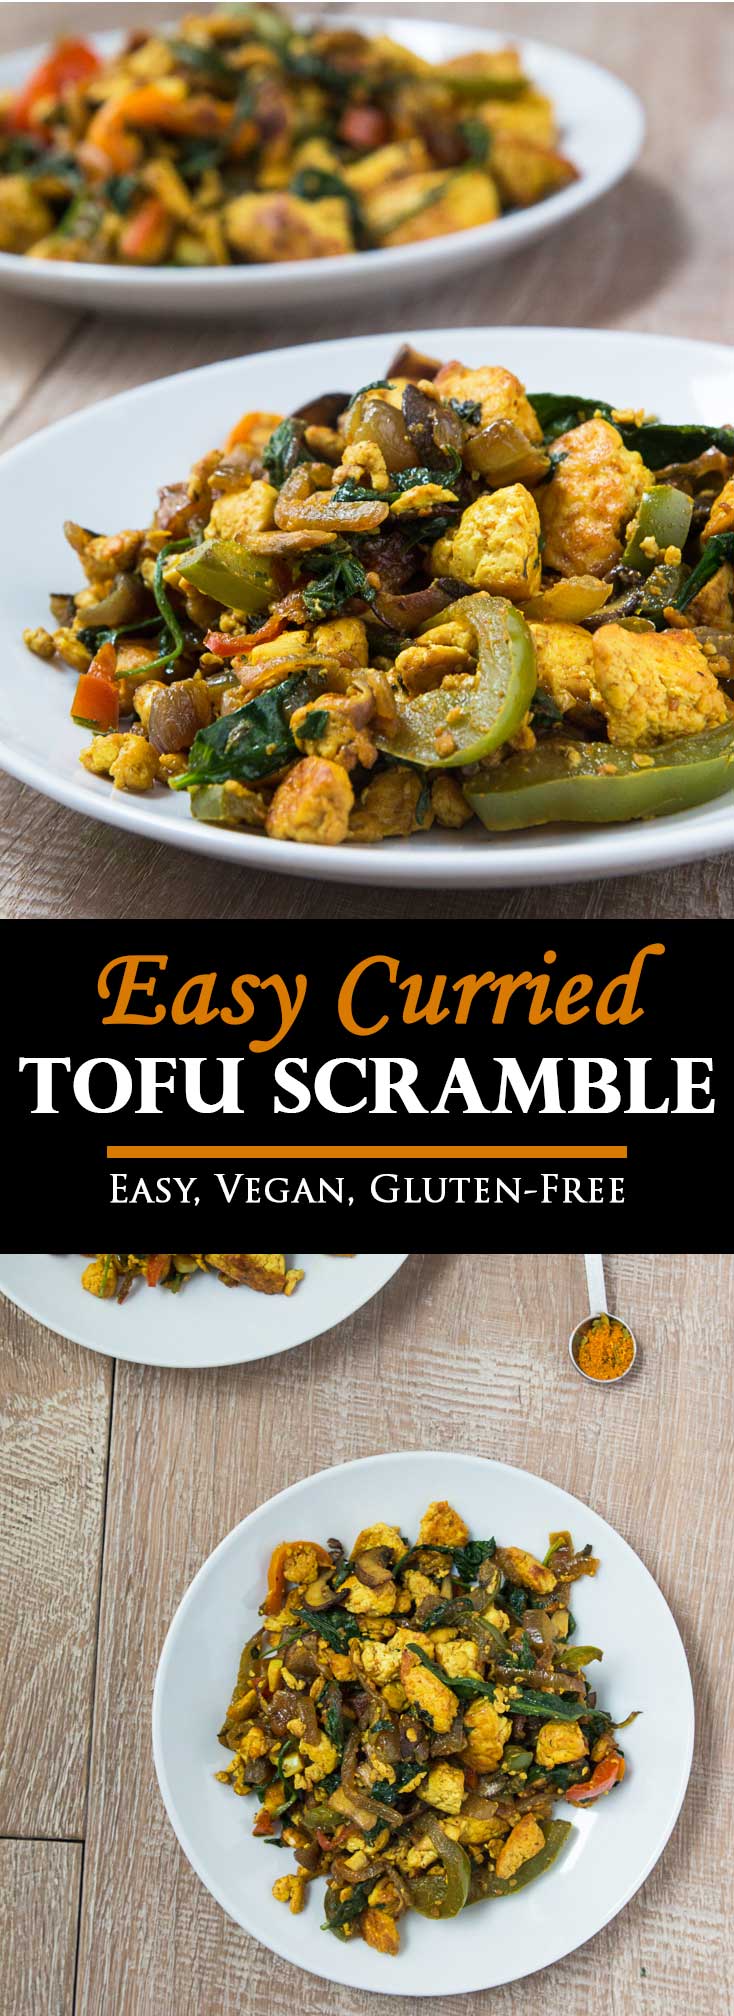 Easy Curried Tofu Scramble Recipe #glutenfree #vegan | www.Vegeteariangastronomy.com